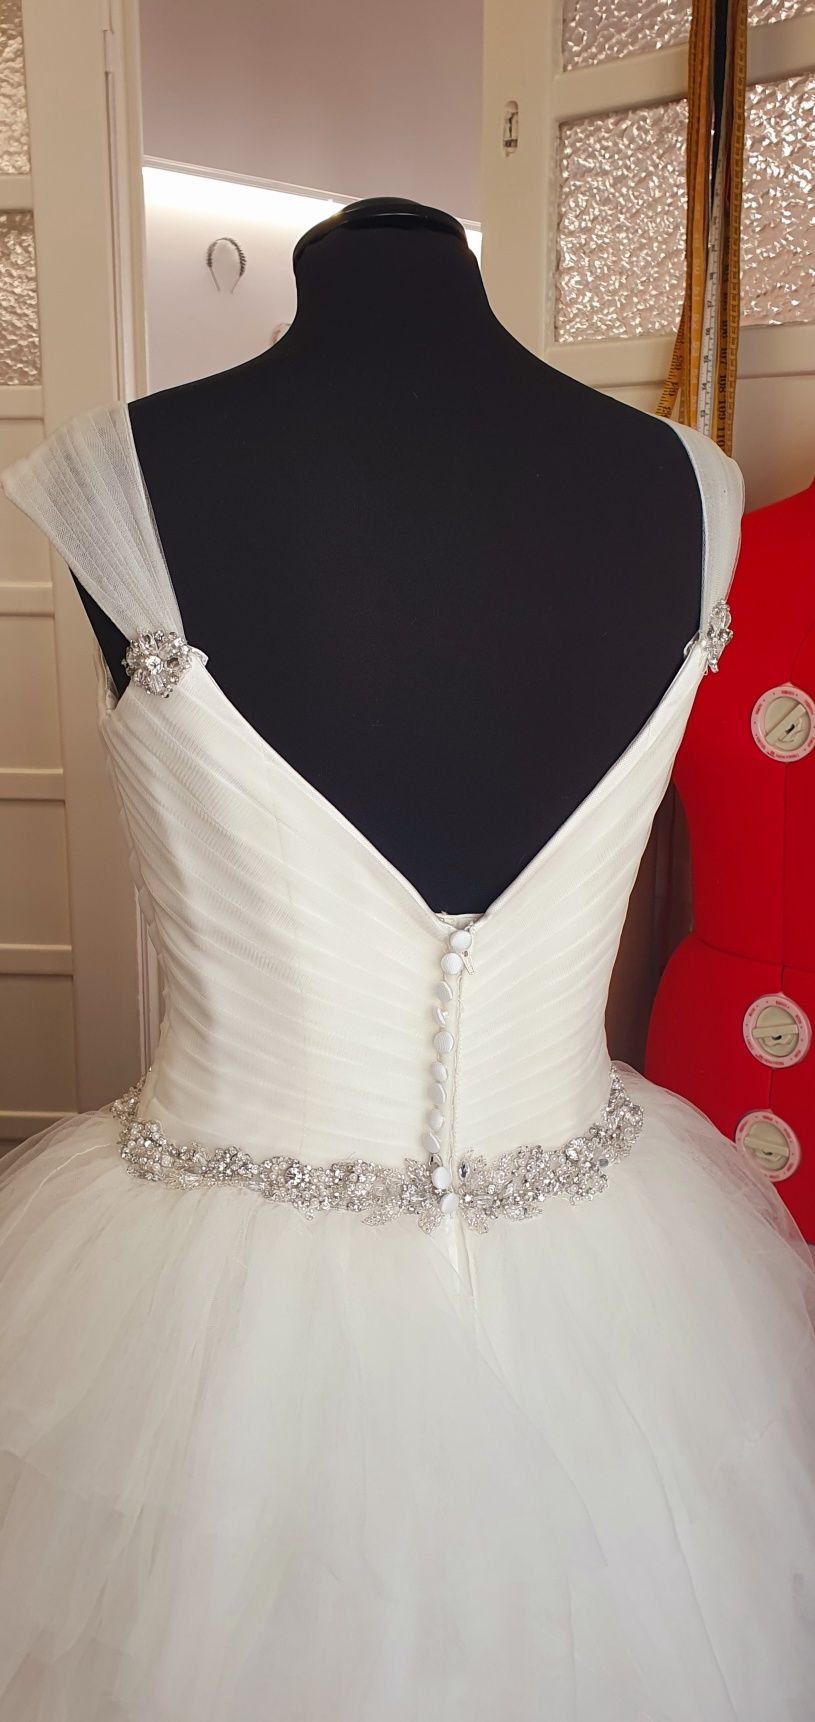 Vestido Casamento / Wedding dress Ronald Joyce